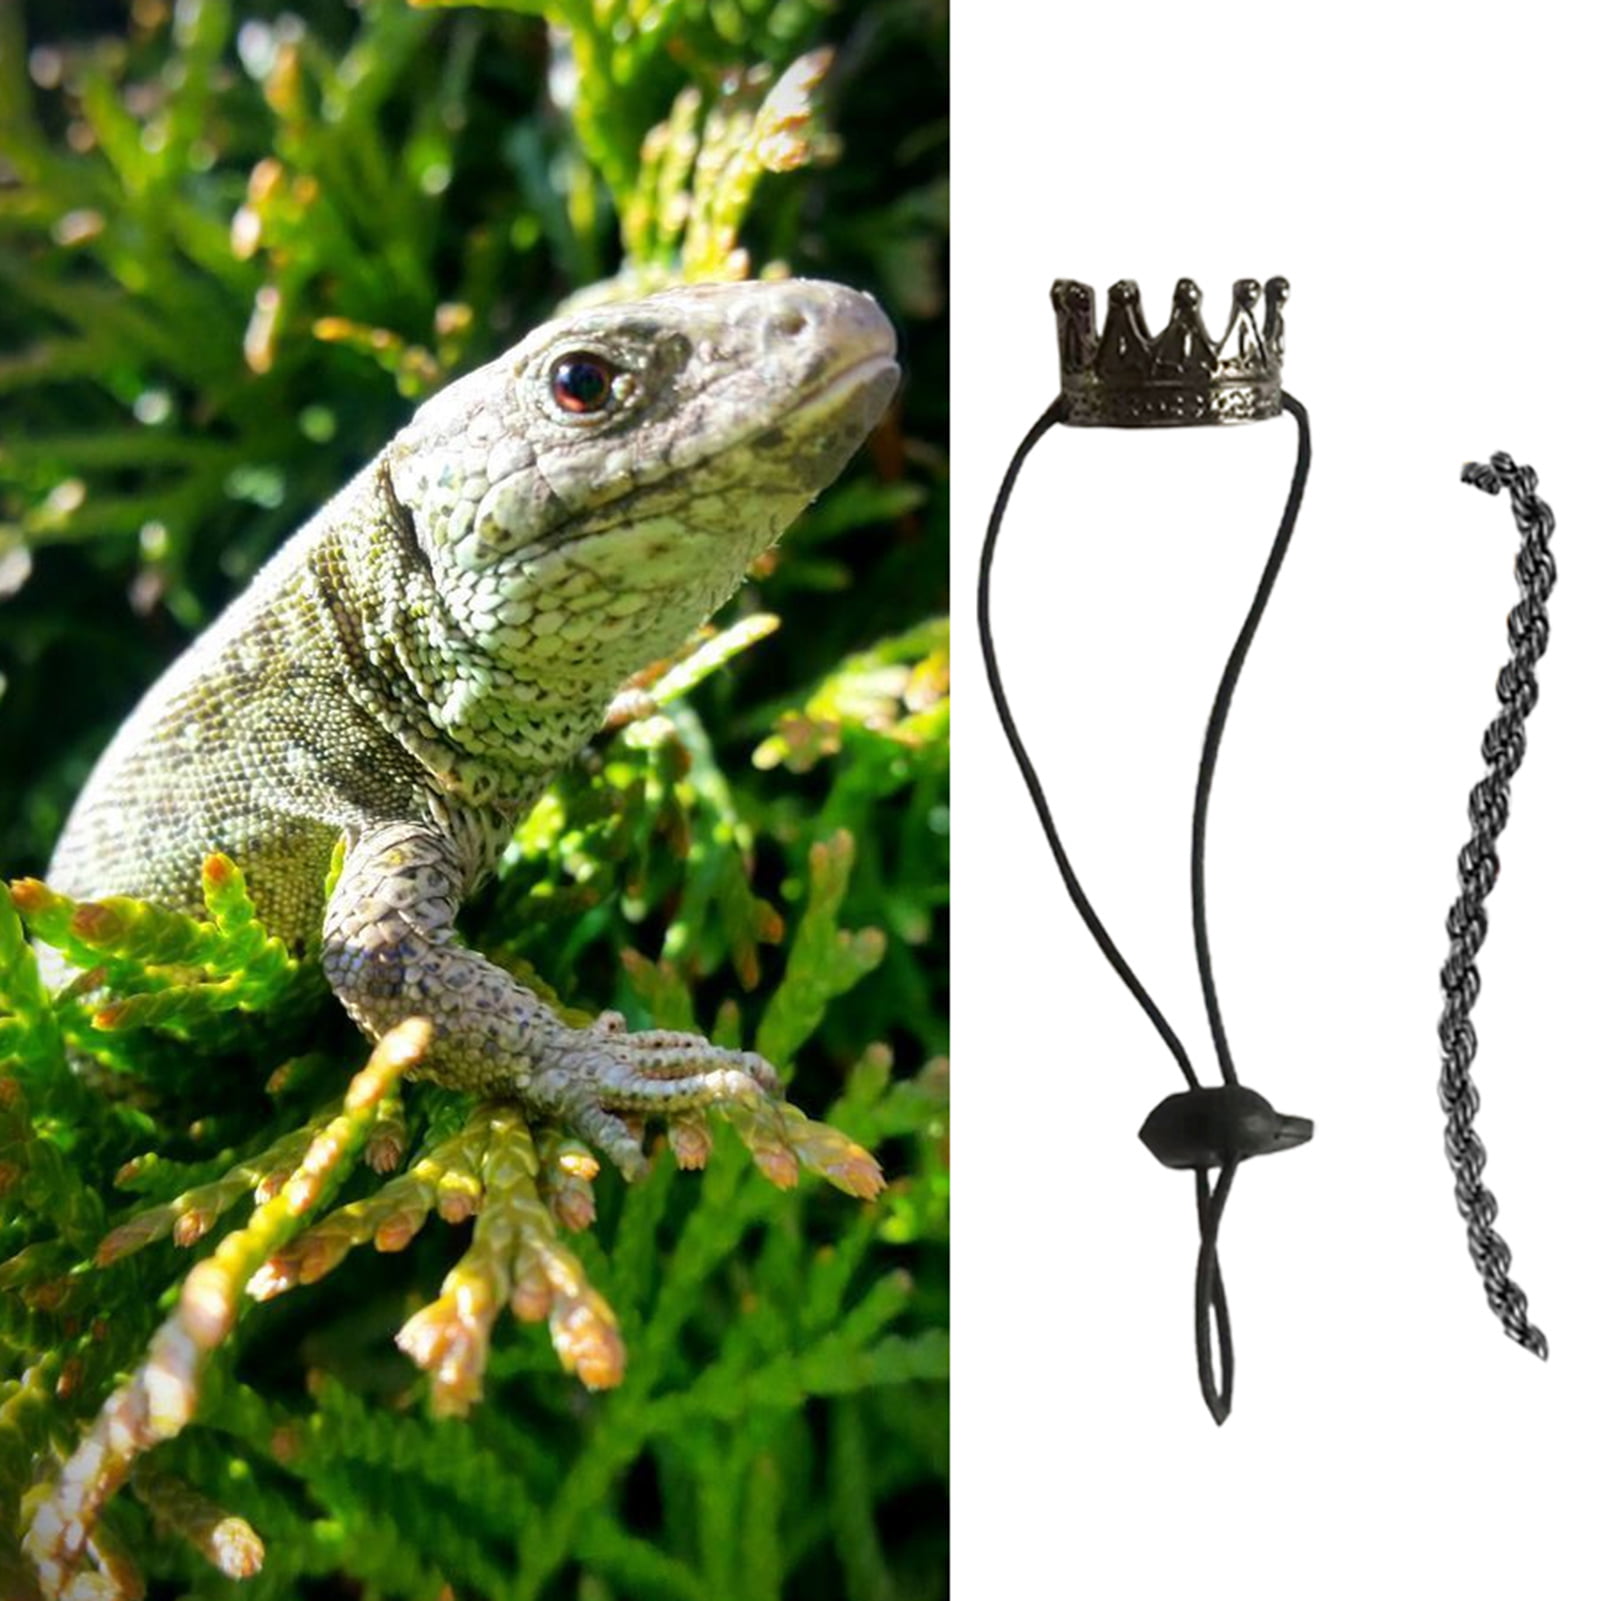 Cute Minimalist Animal Beads for  Dreadlocks/cow/giraffe/cows/tiger/deer/reptile/beads Decorations for  Dreadlocks/dreads Accessories 